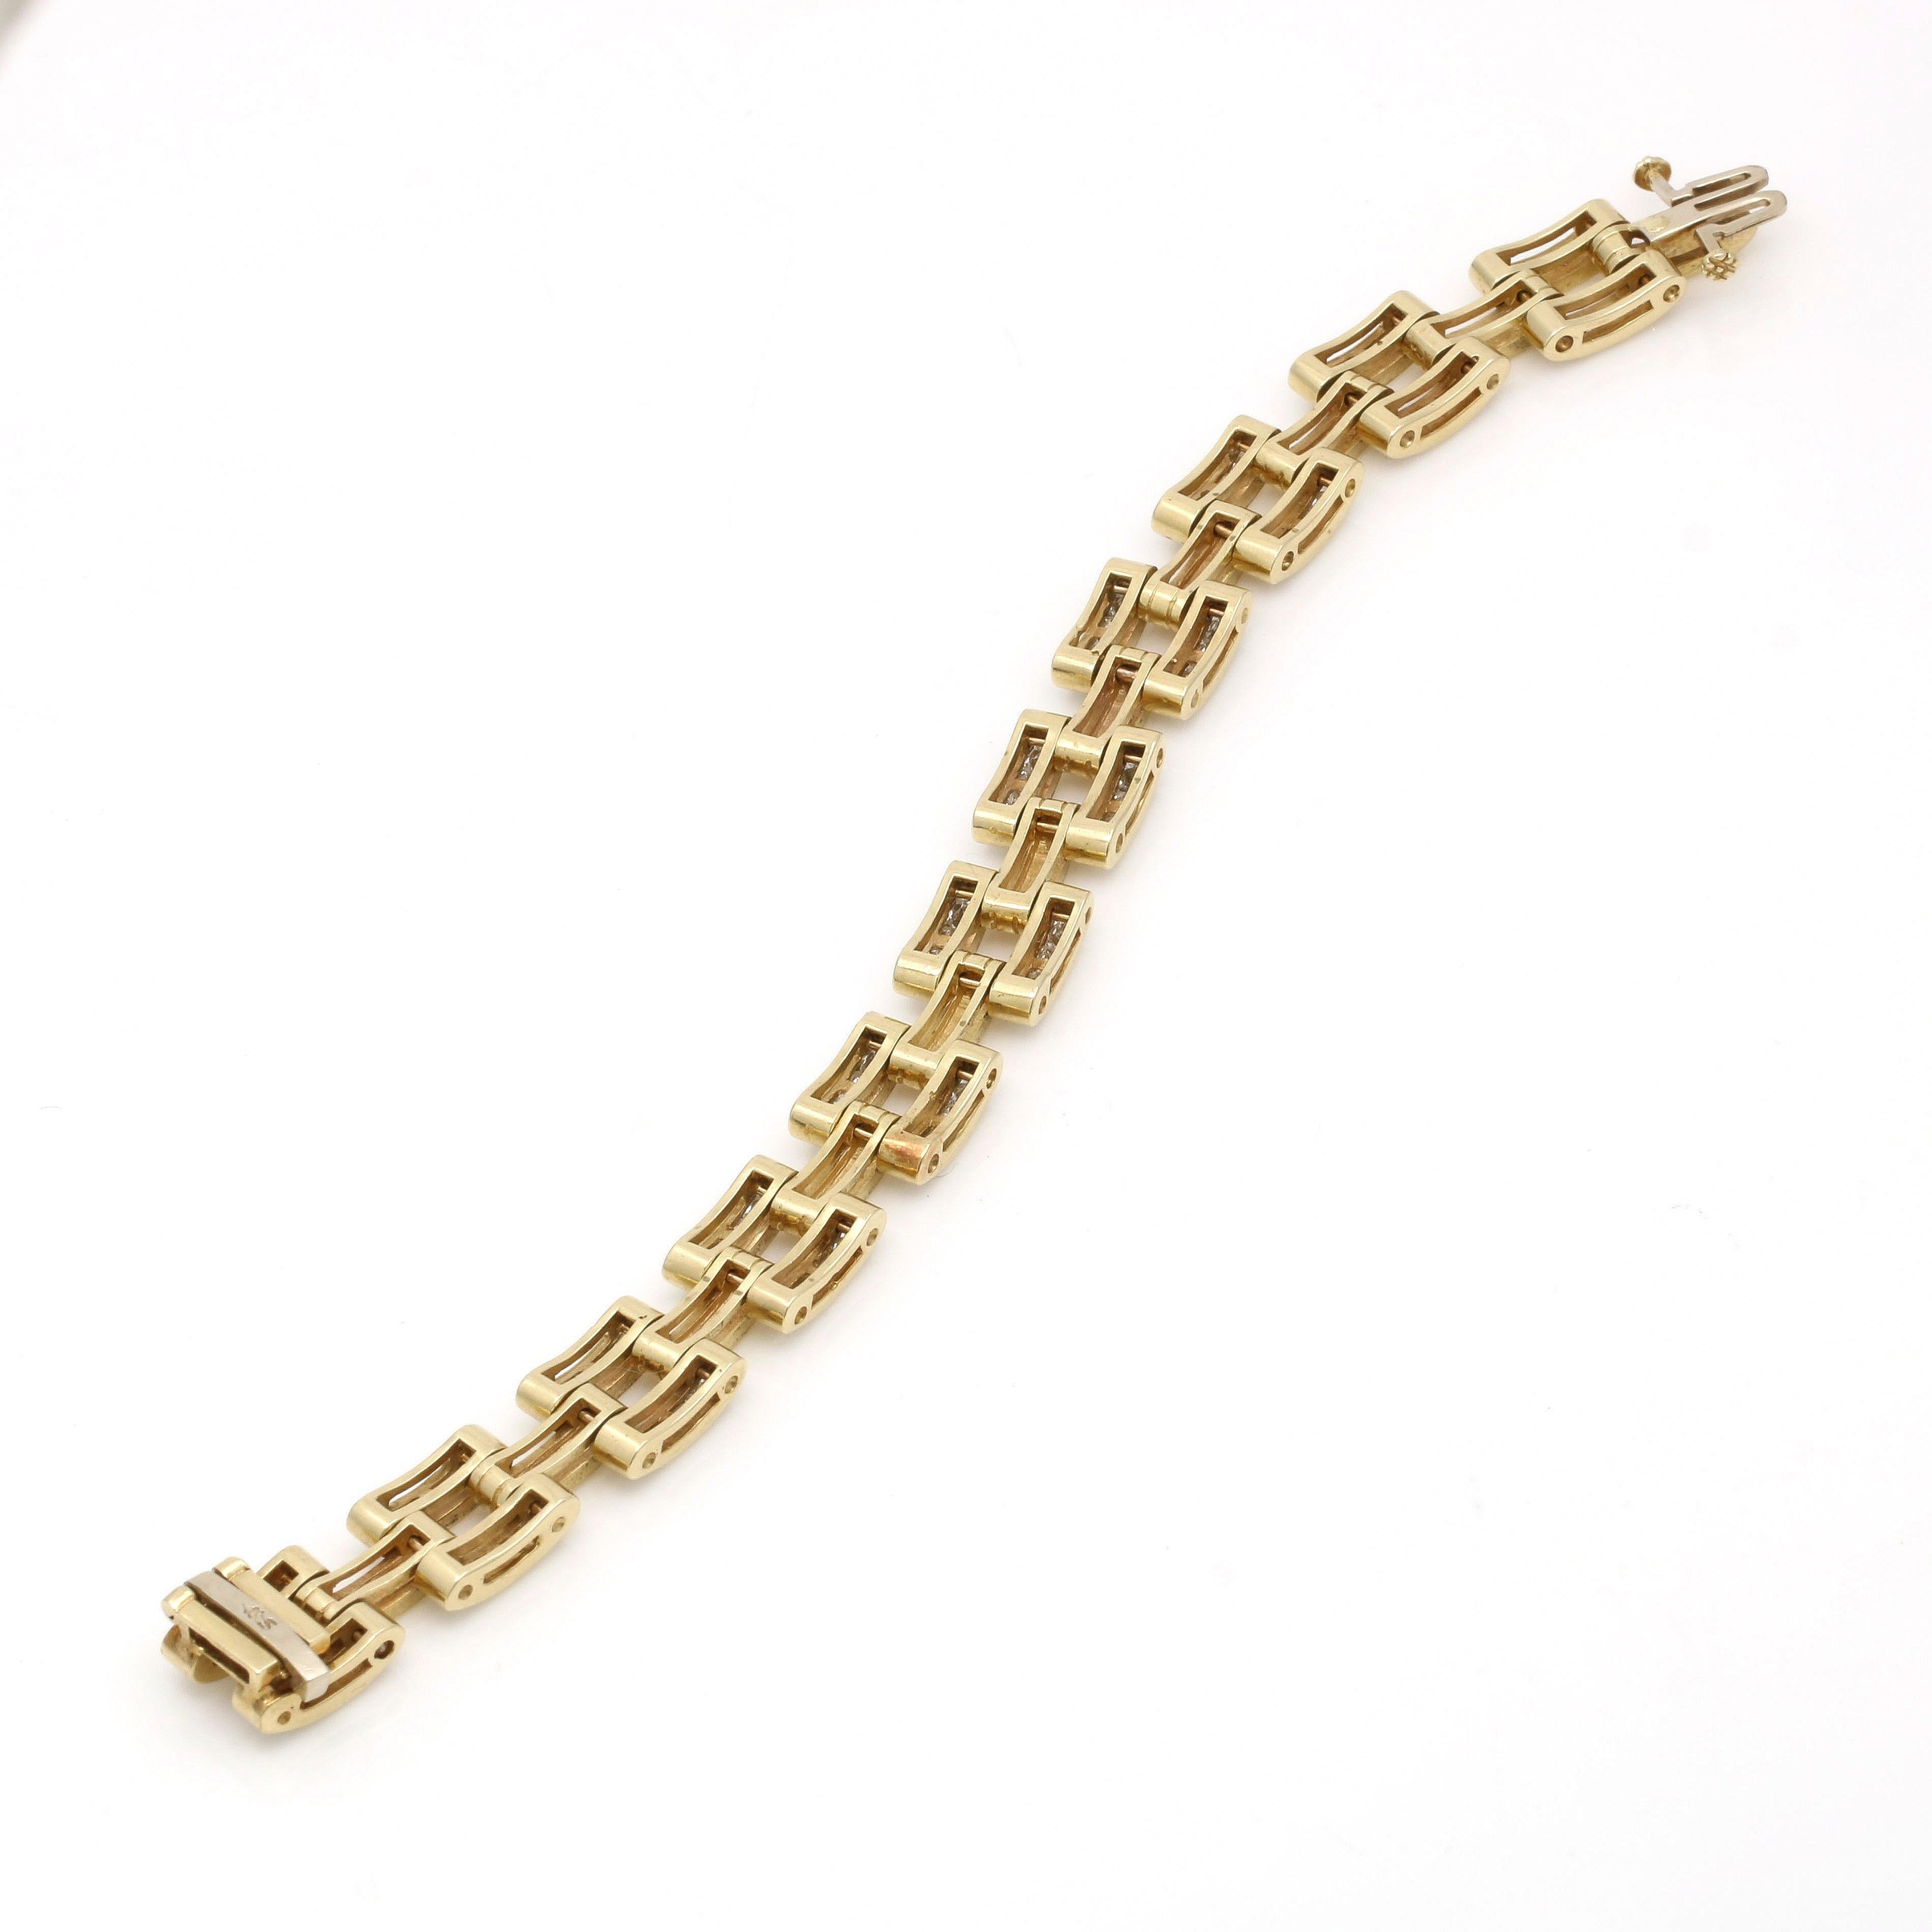 Princess Cut Women's Diamond Link Bracelet in 14k Yellow Gold 8.80cttw